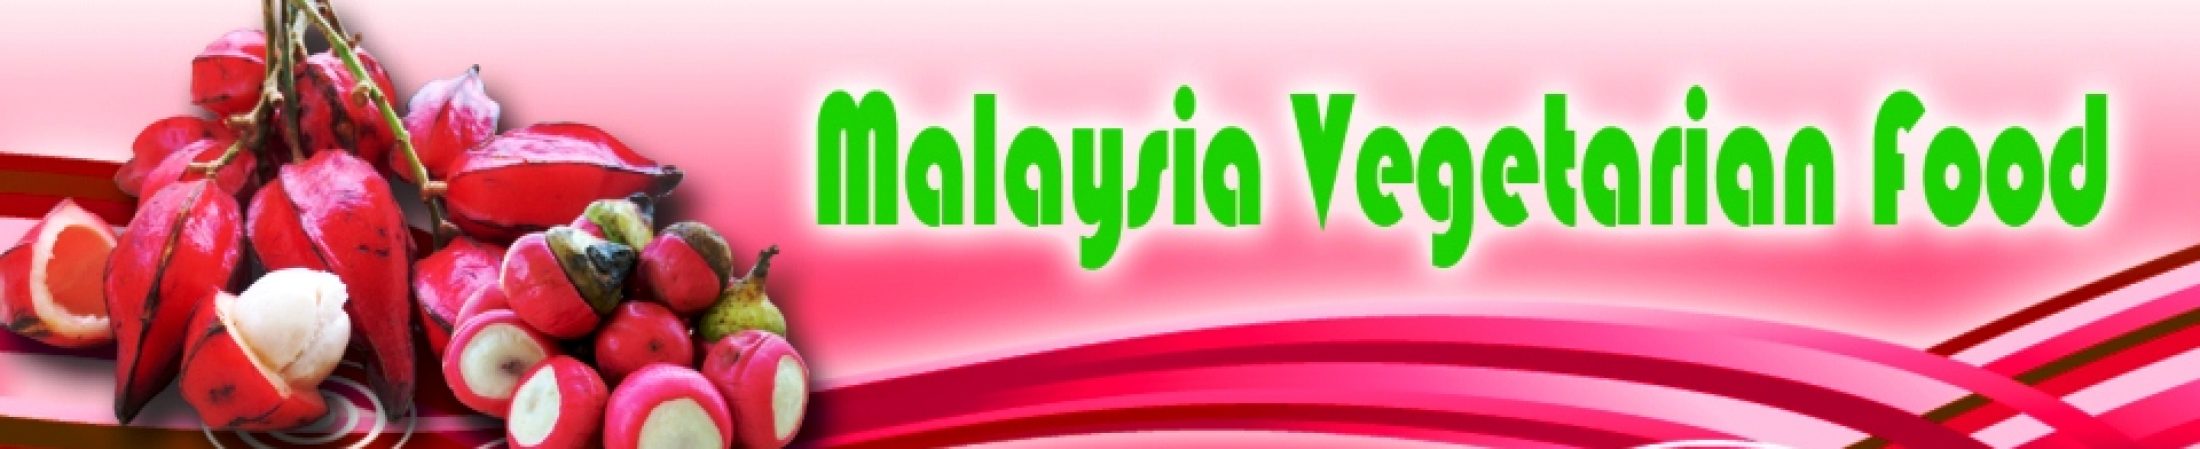 Malaysia Vegetarian Food